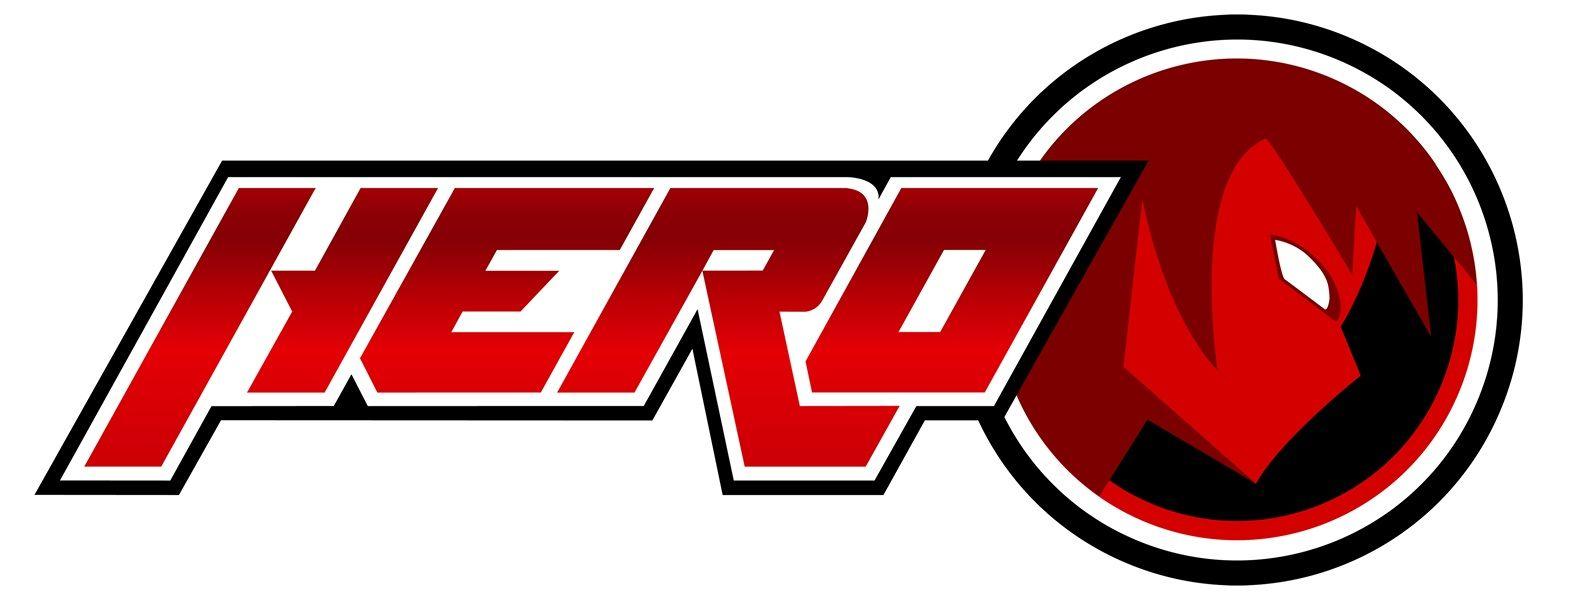 Hero Logo - Hero (Philippine TV channel)